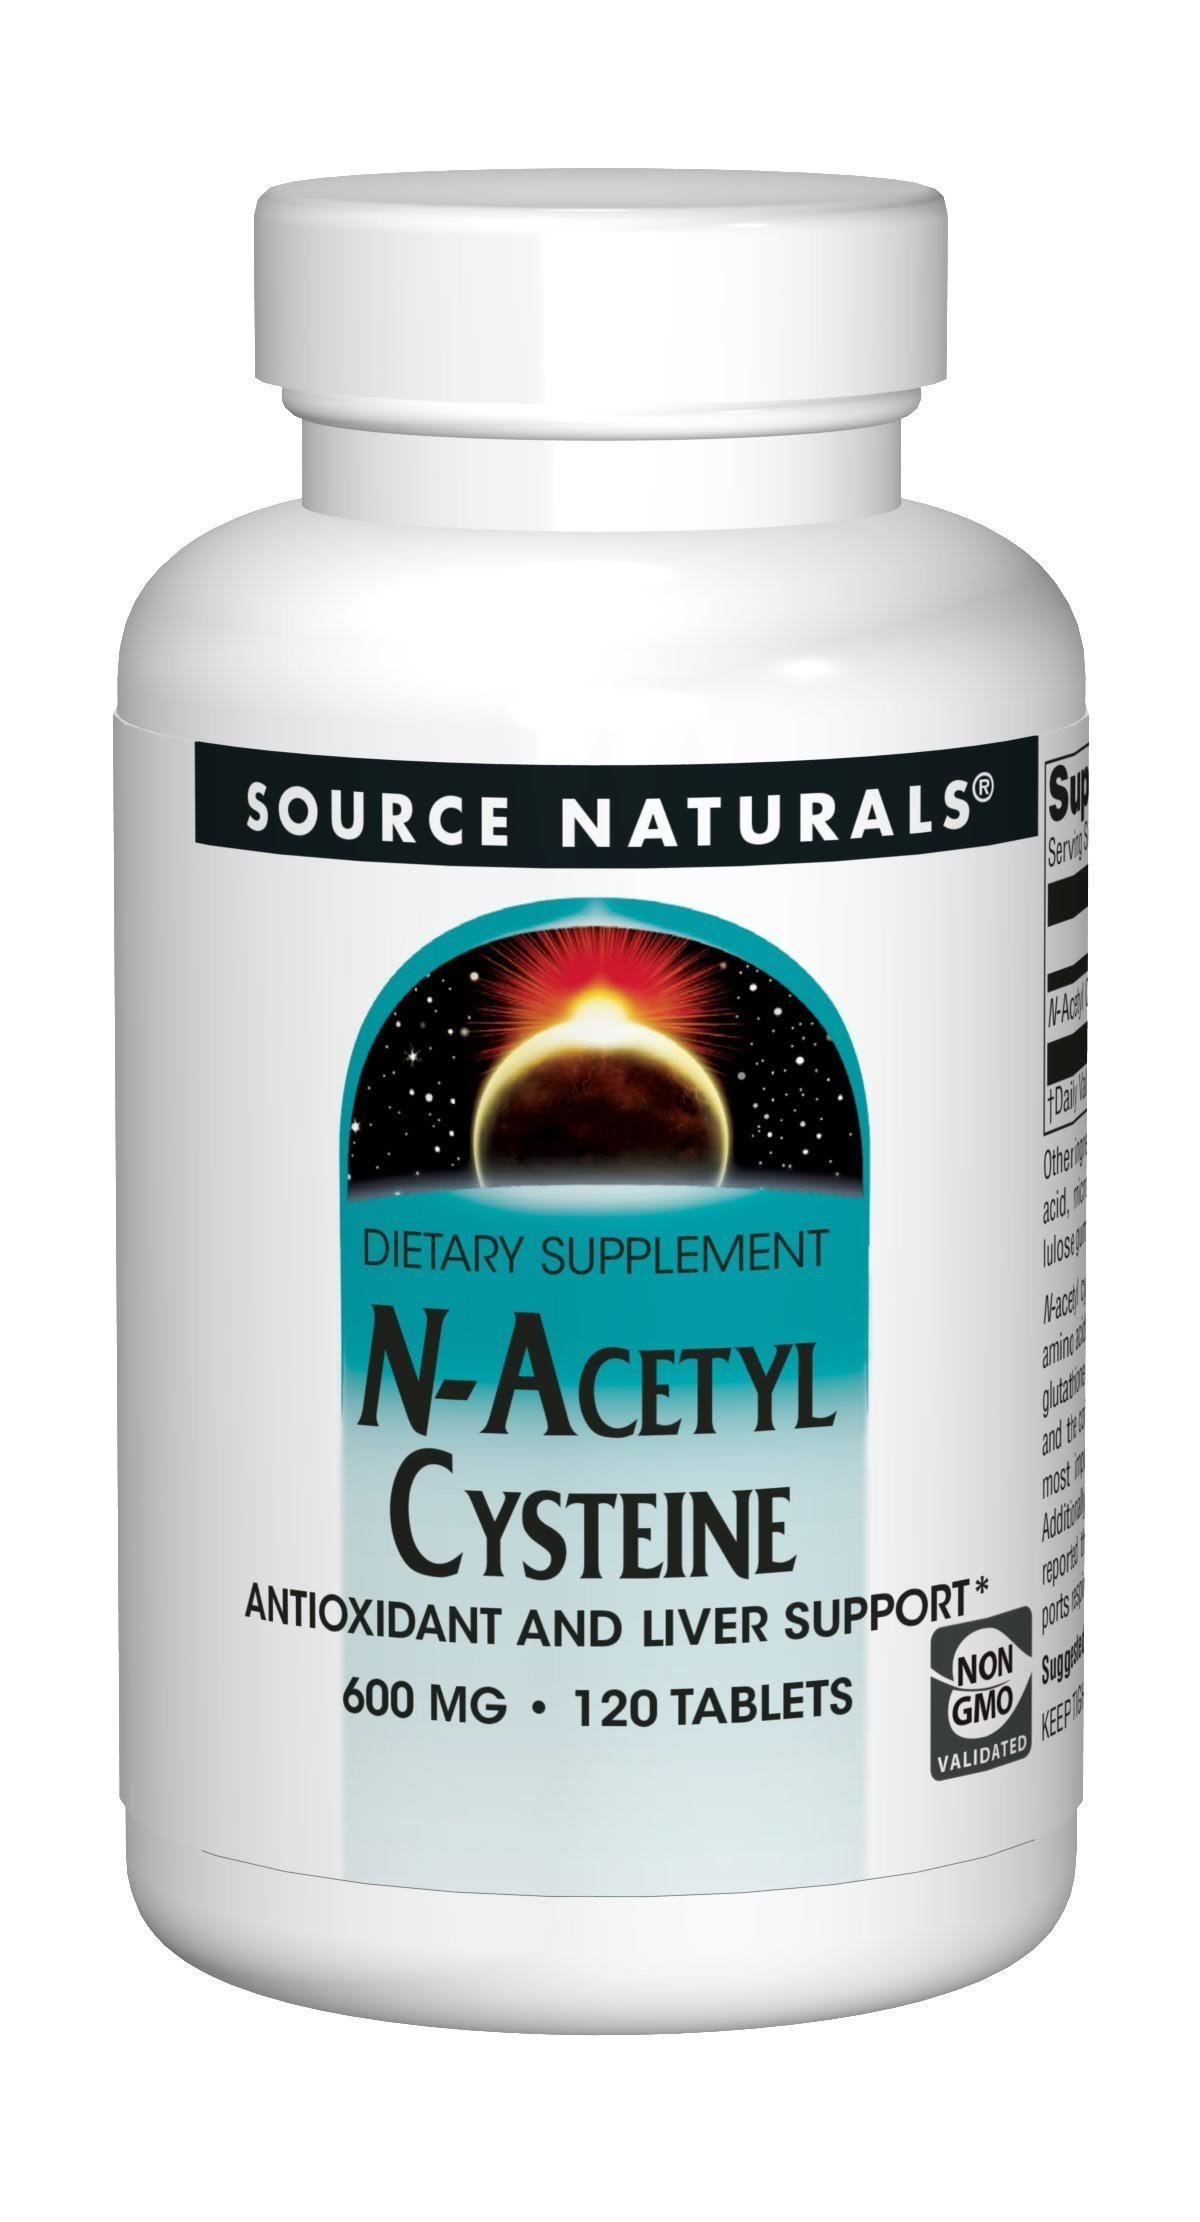 Source Naturals N-Acetyl Cysteine Dietary Supplement - 600mg, 120ct